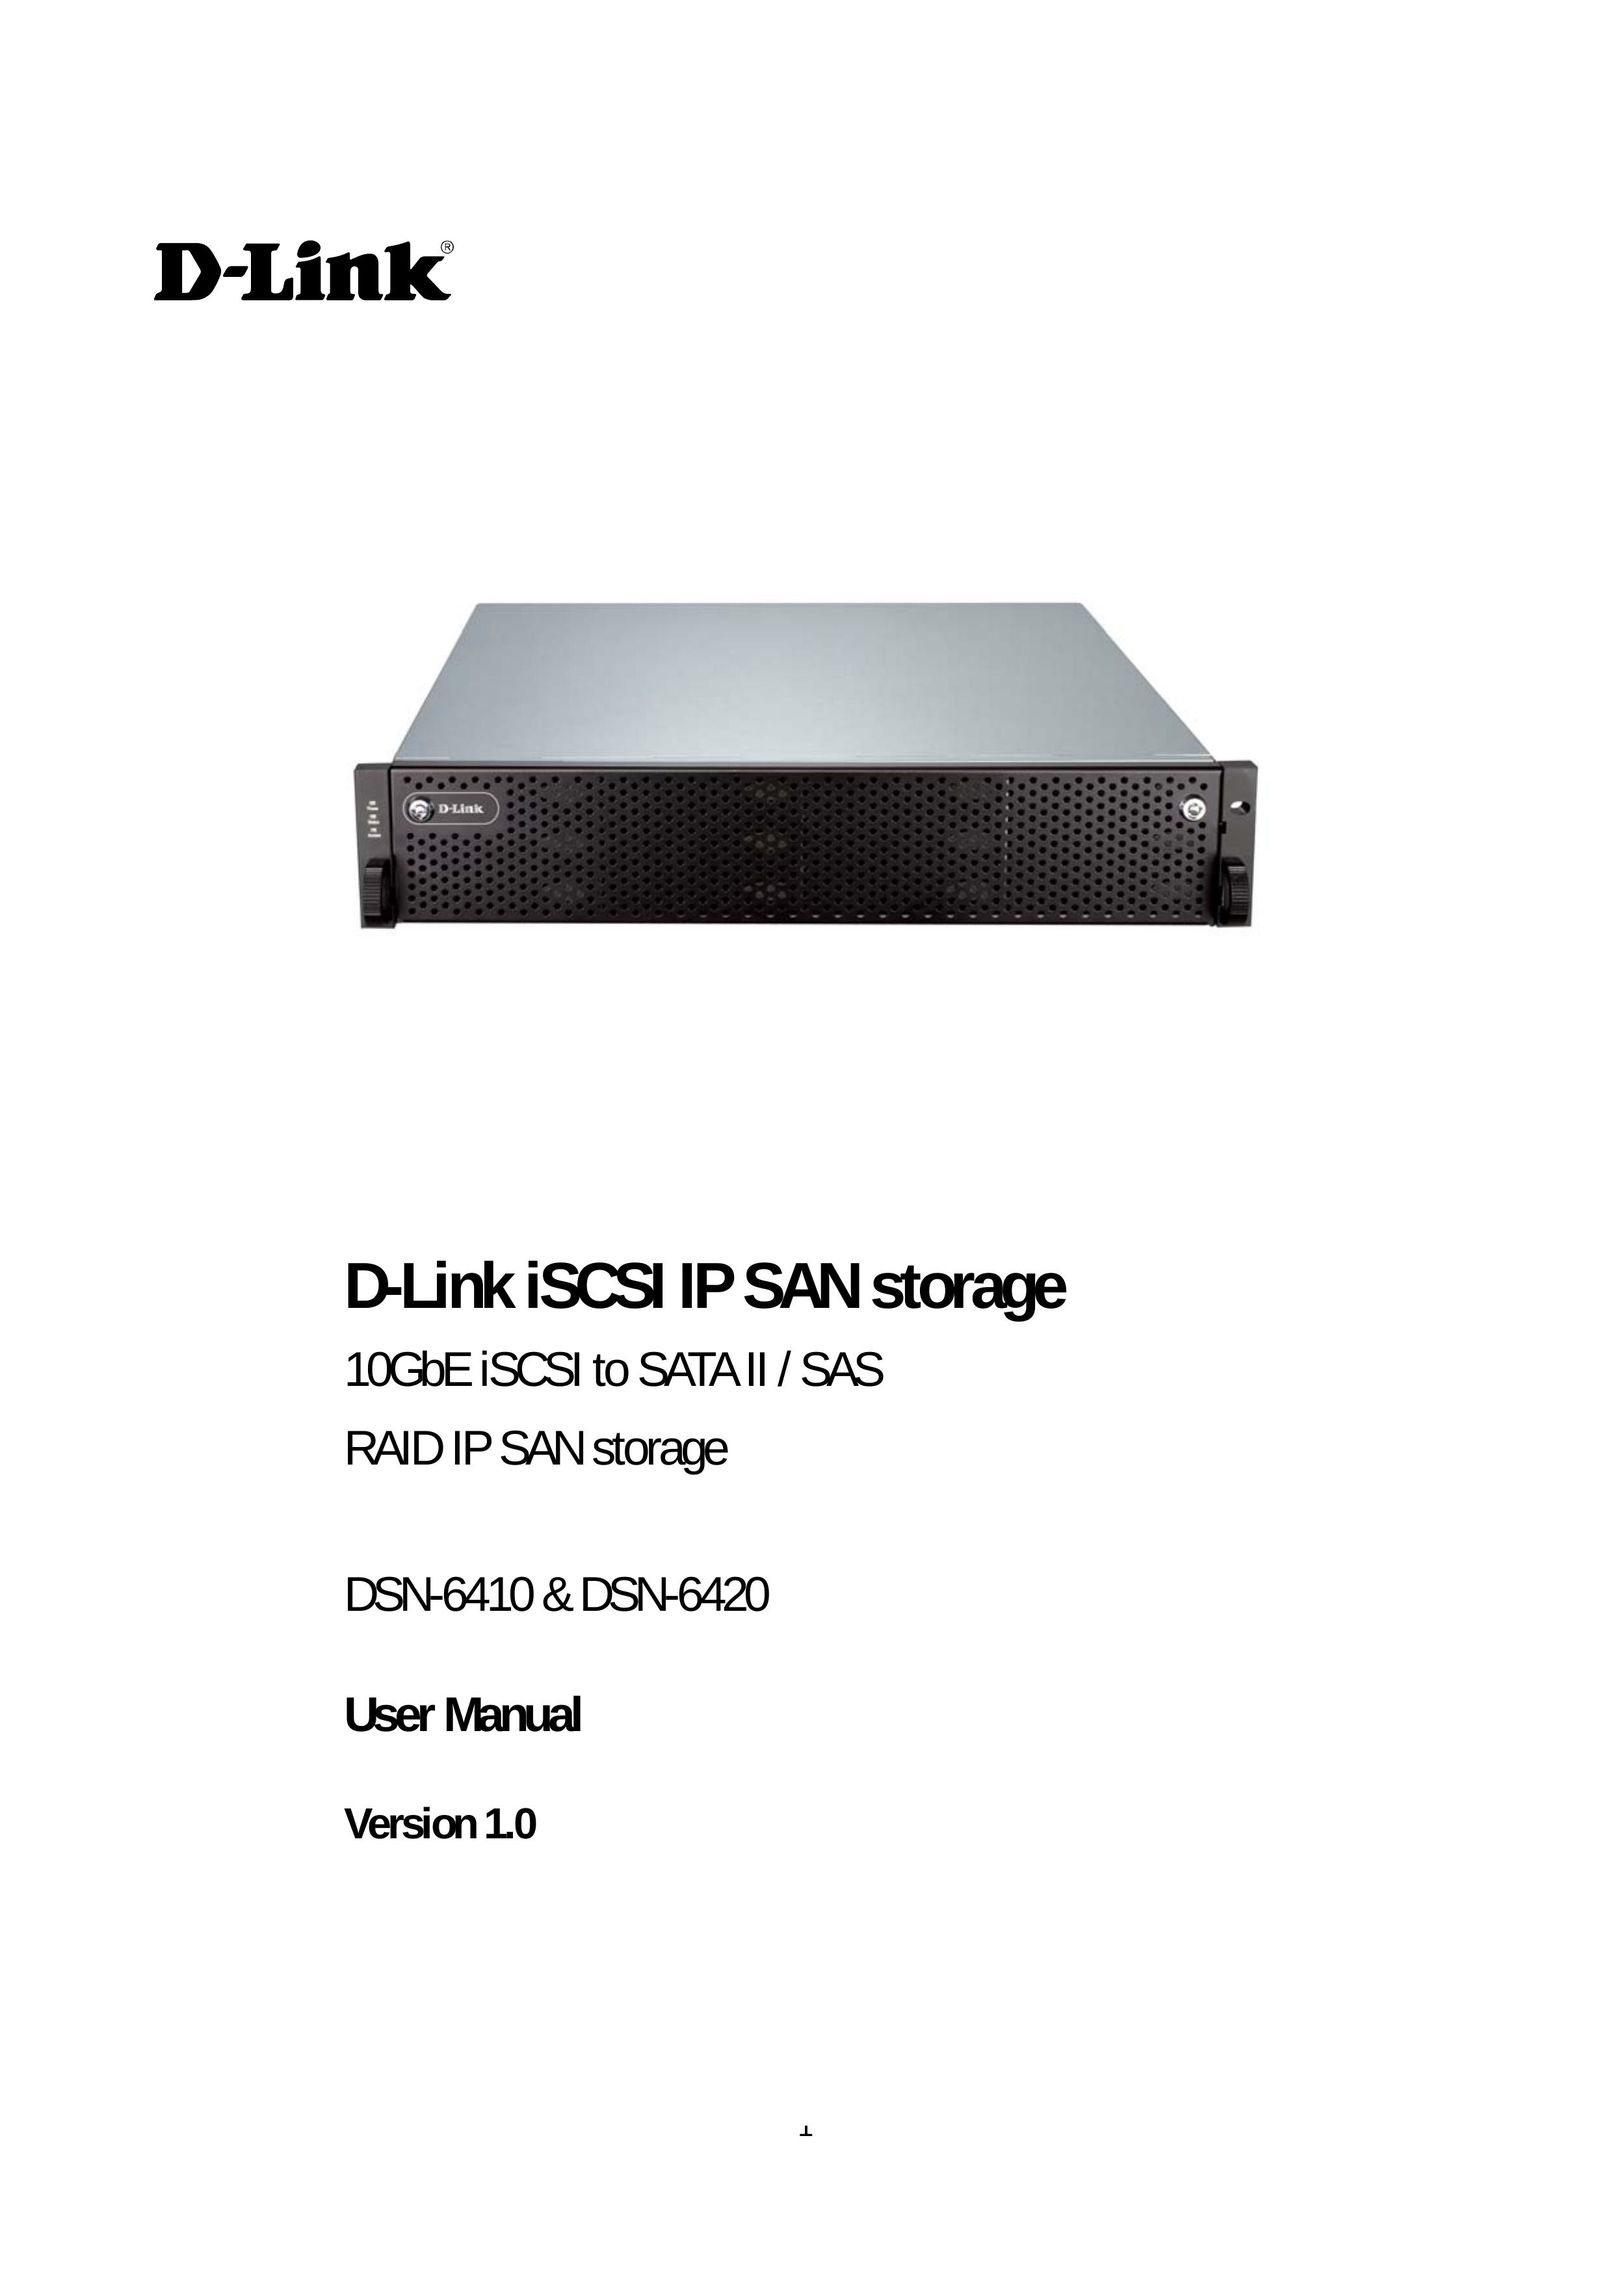 D-Link DSN-6420 Tool Storage User Manual